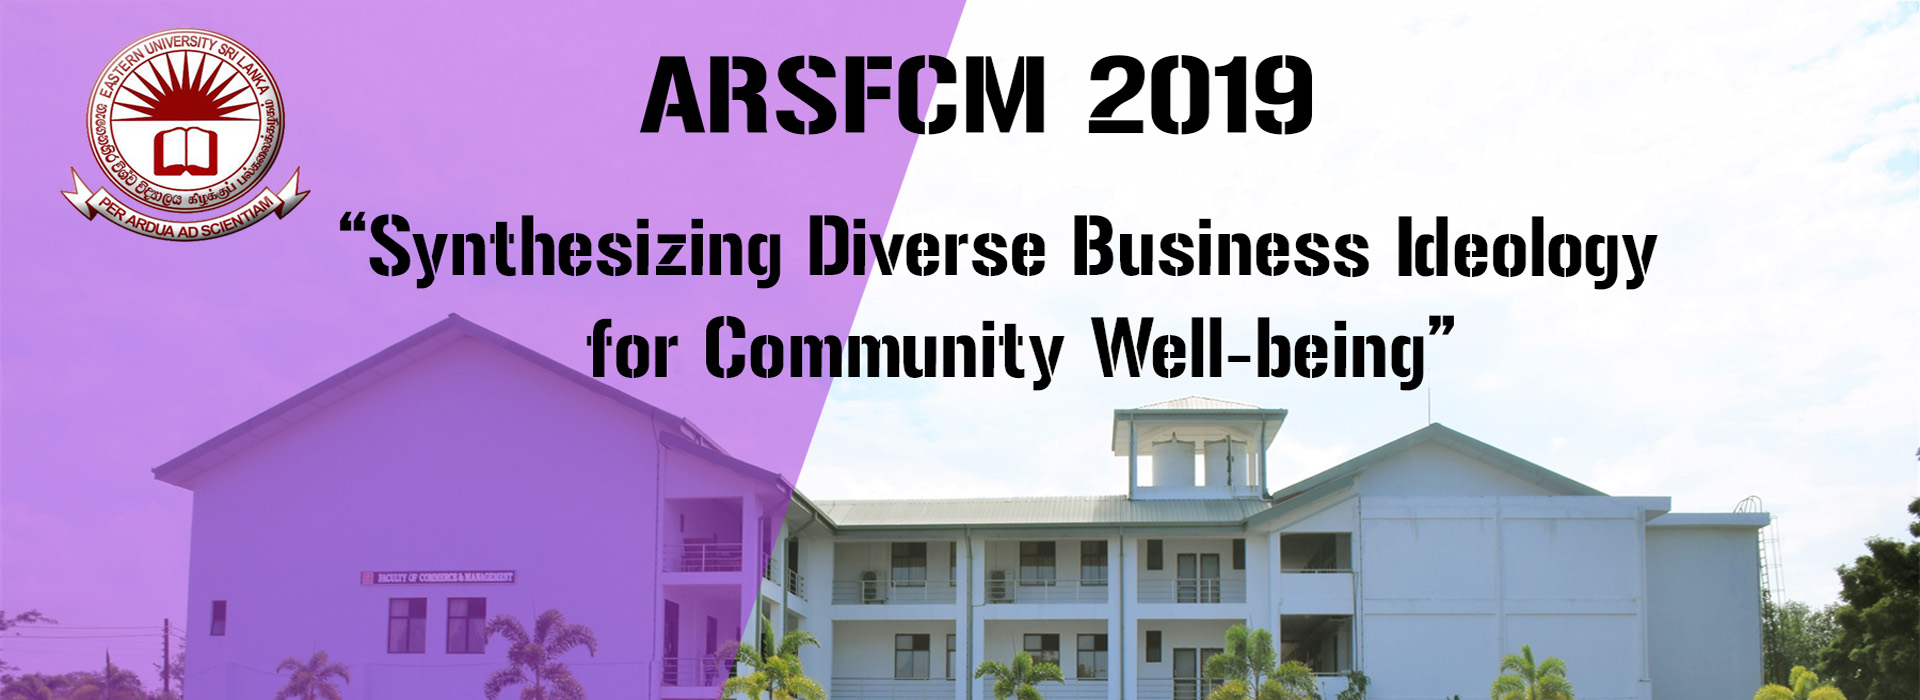 ARSFCM-2019